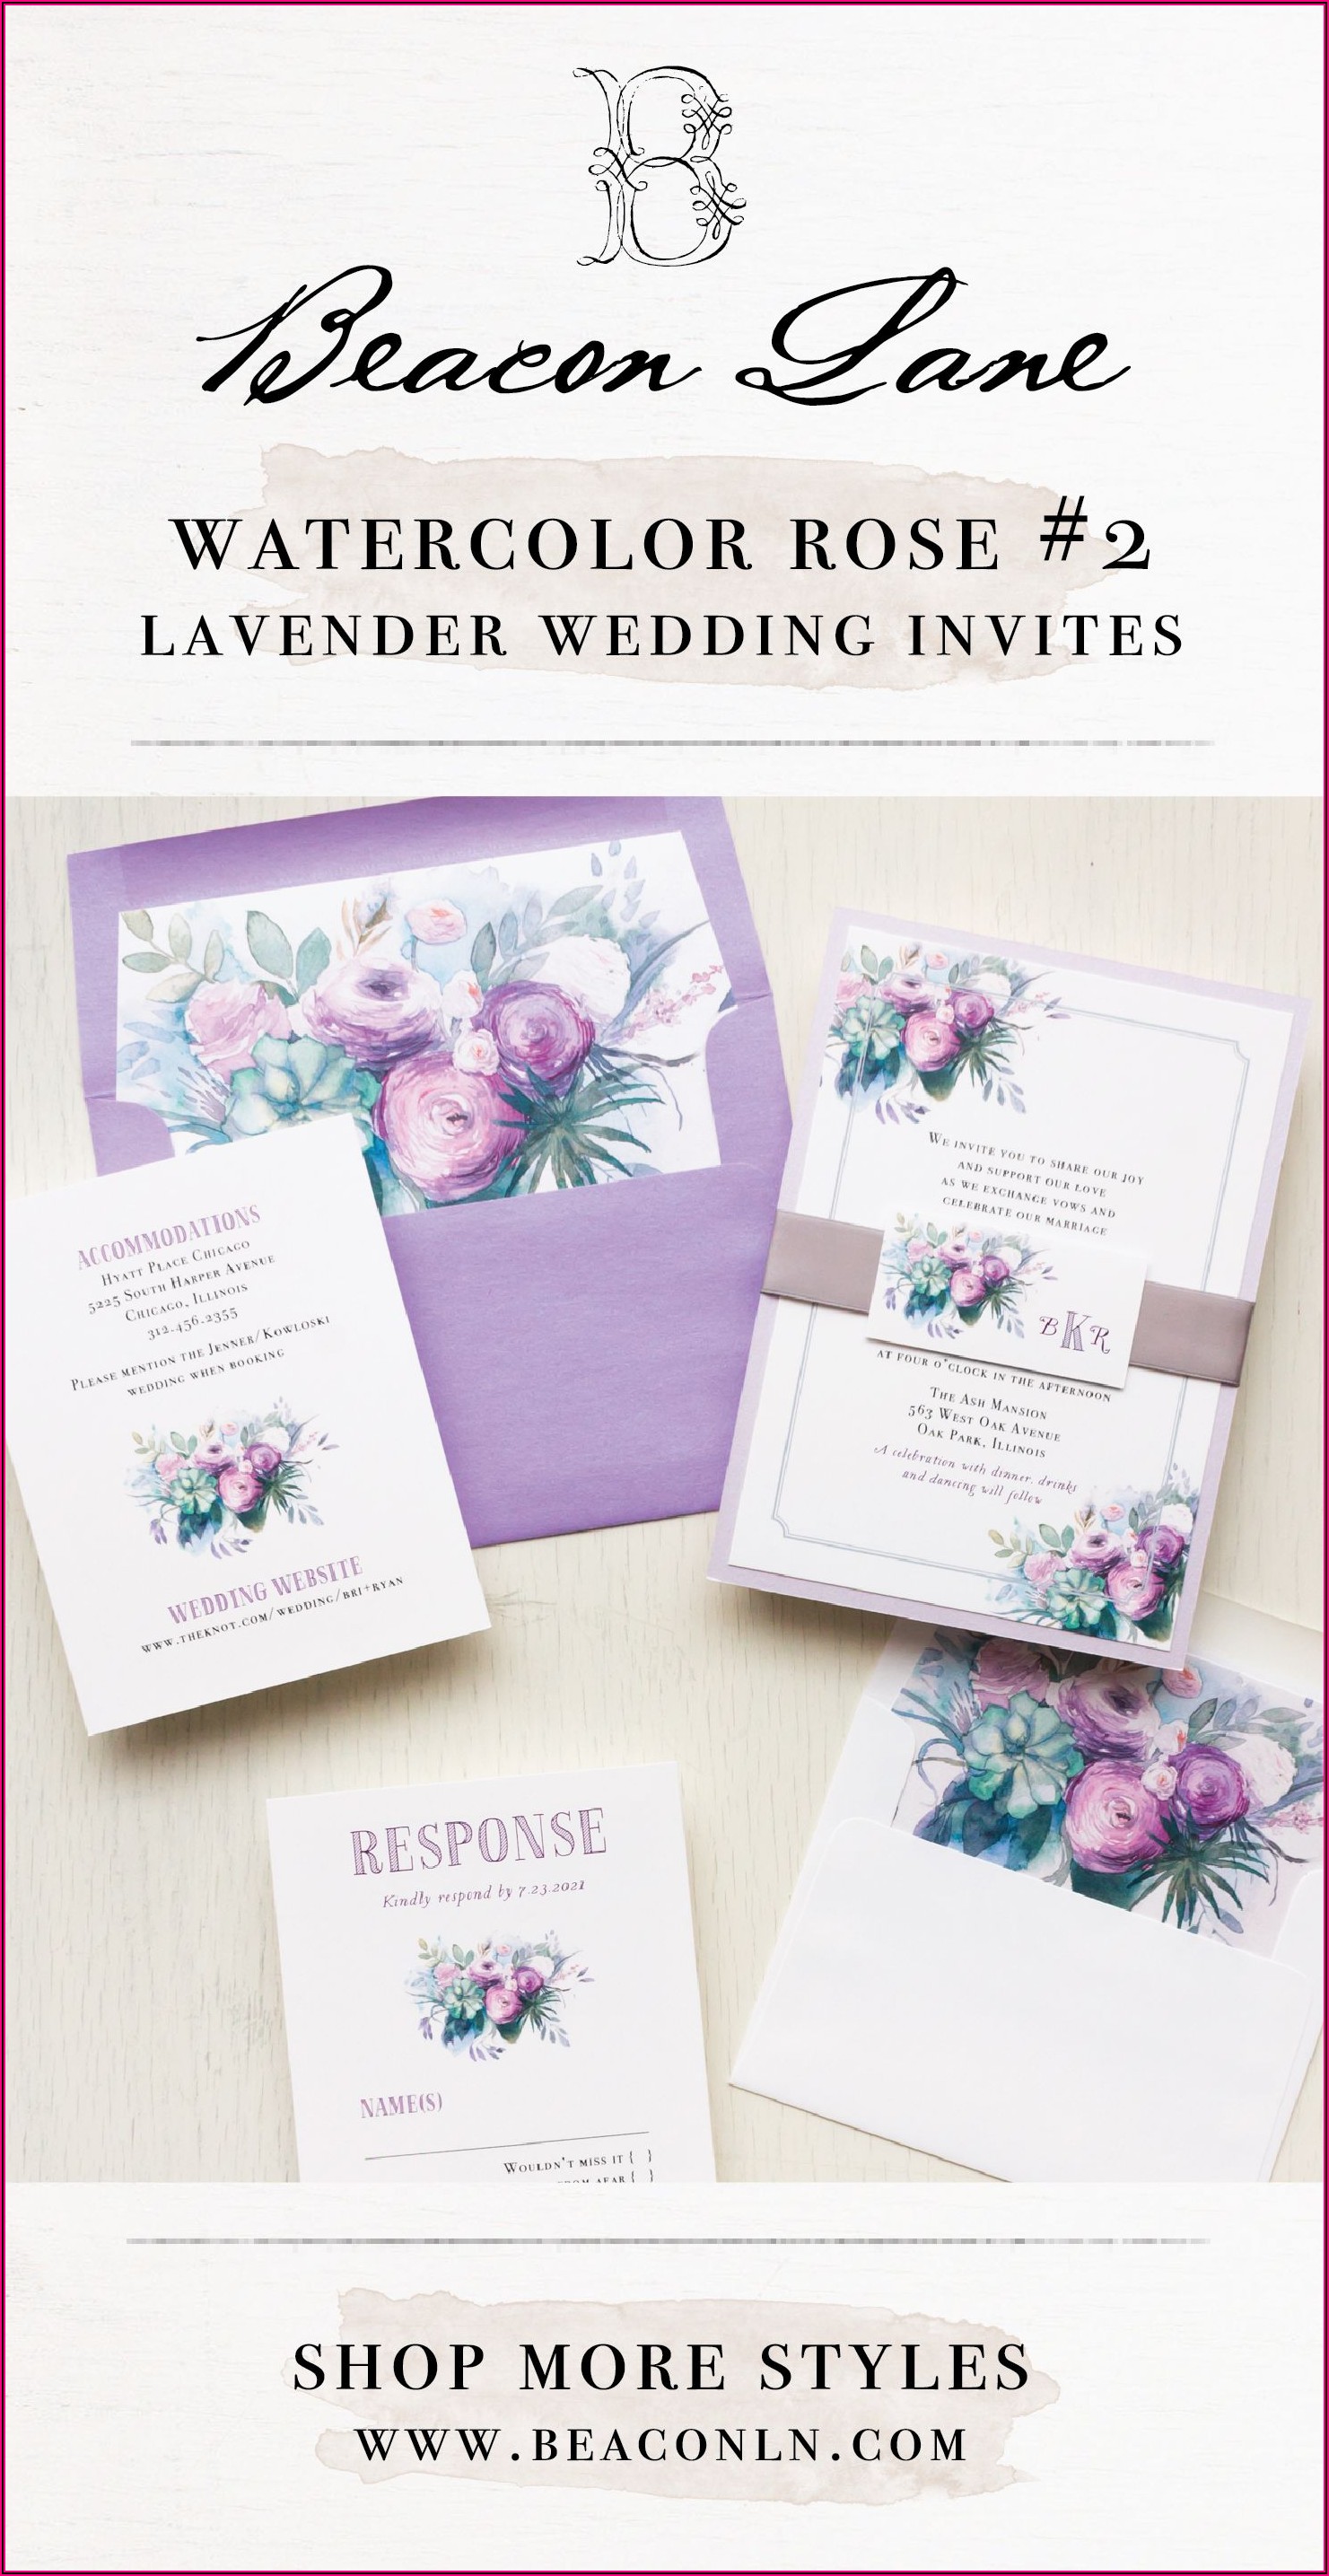 Purple Rose Wedding Invitations